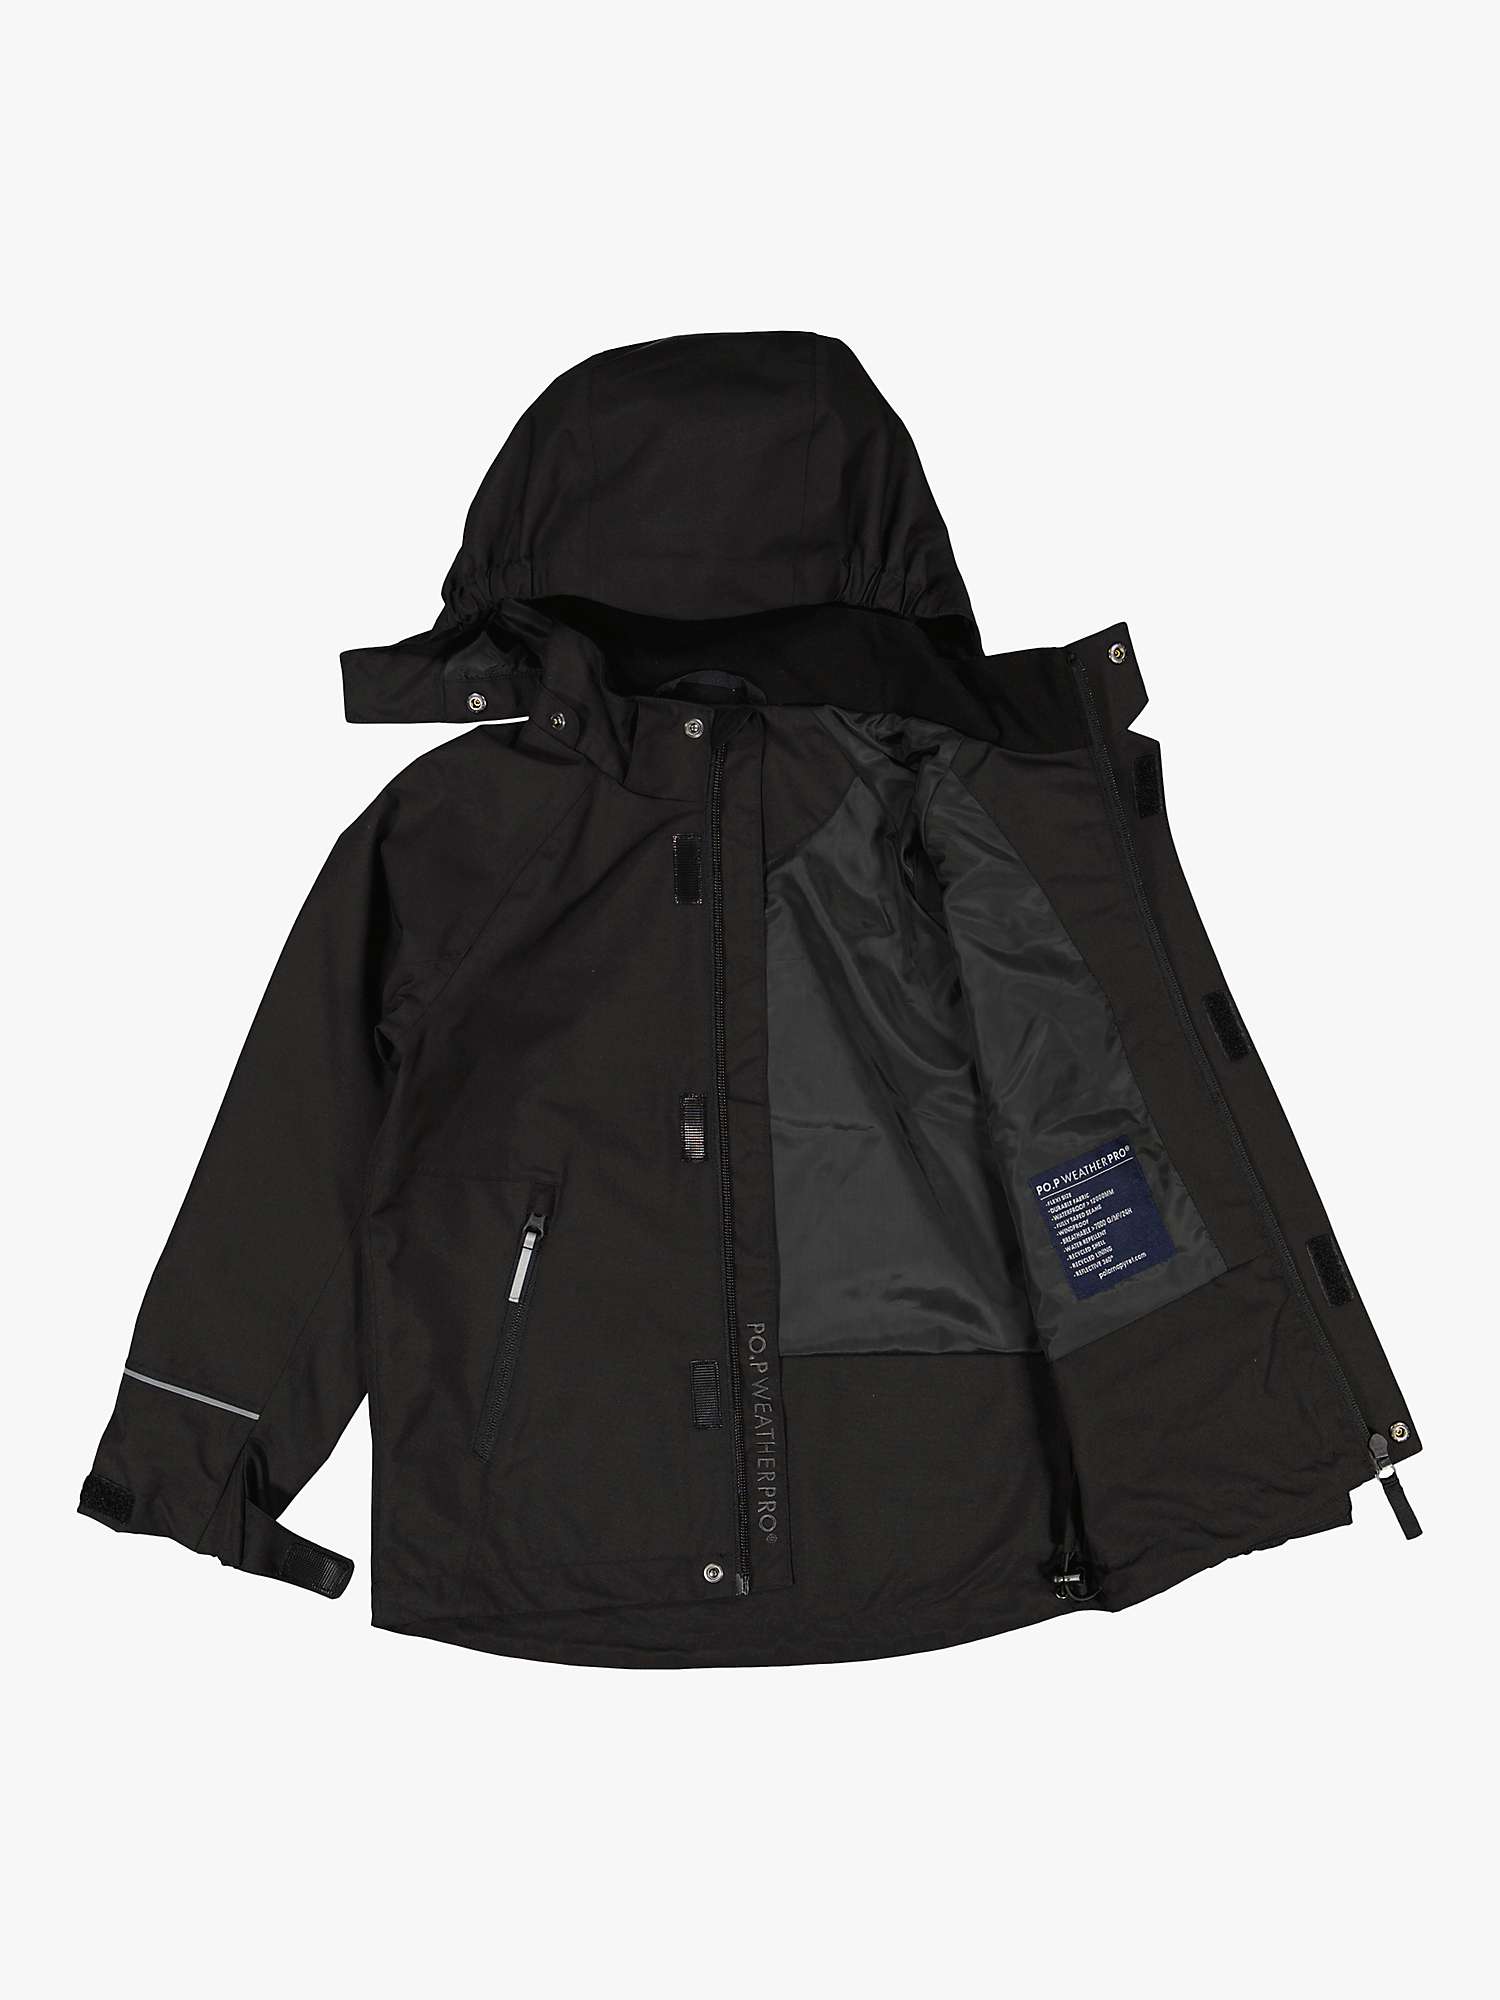 Buy Polarn O. Pyret Kids' Flexisize Windproof Waterproof Jacket Online at johnlewis.com